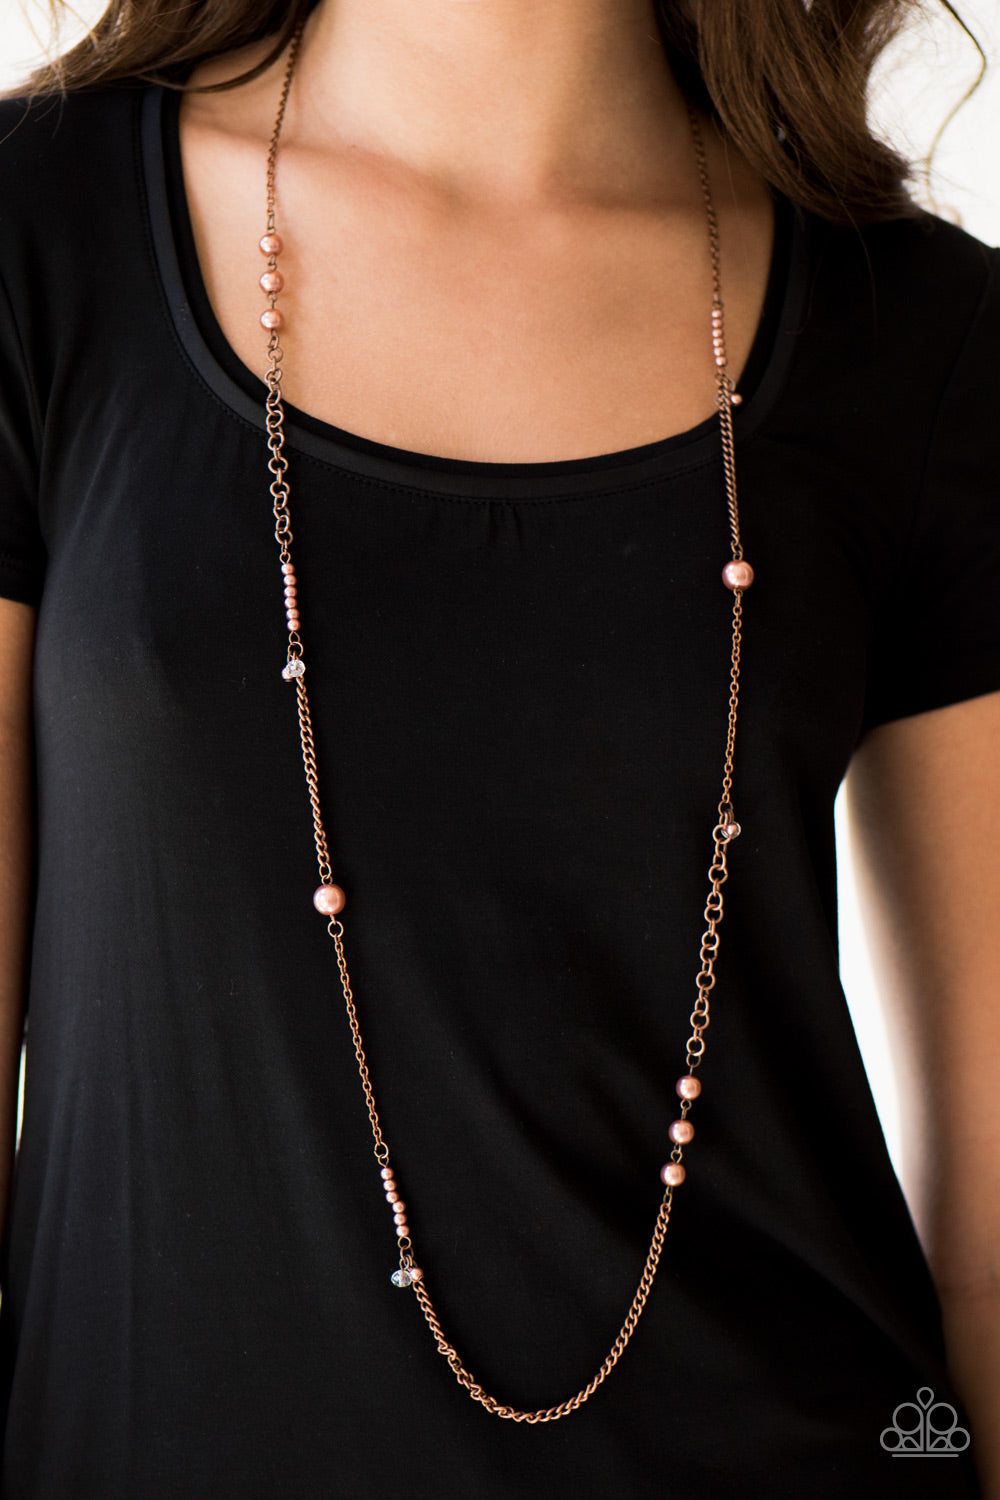 I Stil-etto Believe - copper - Paparazzi necklace